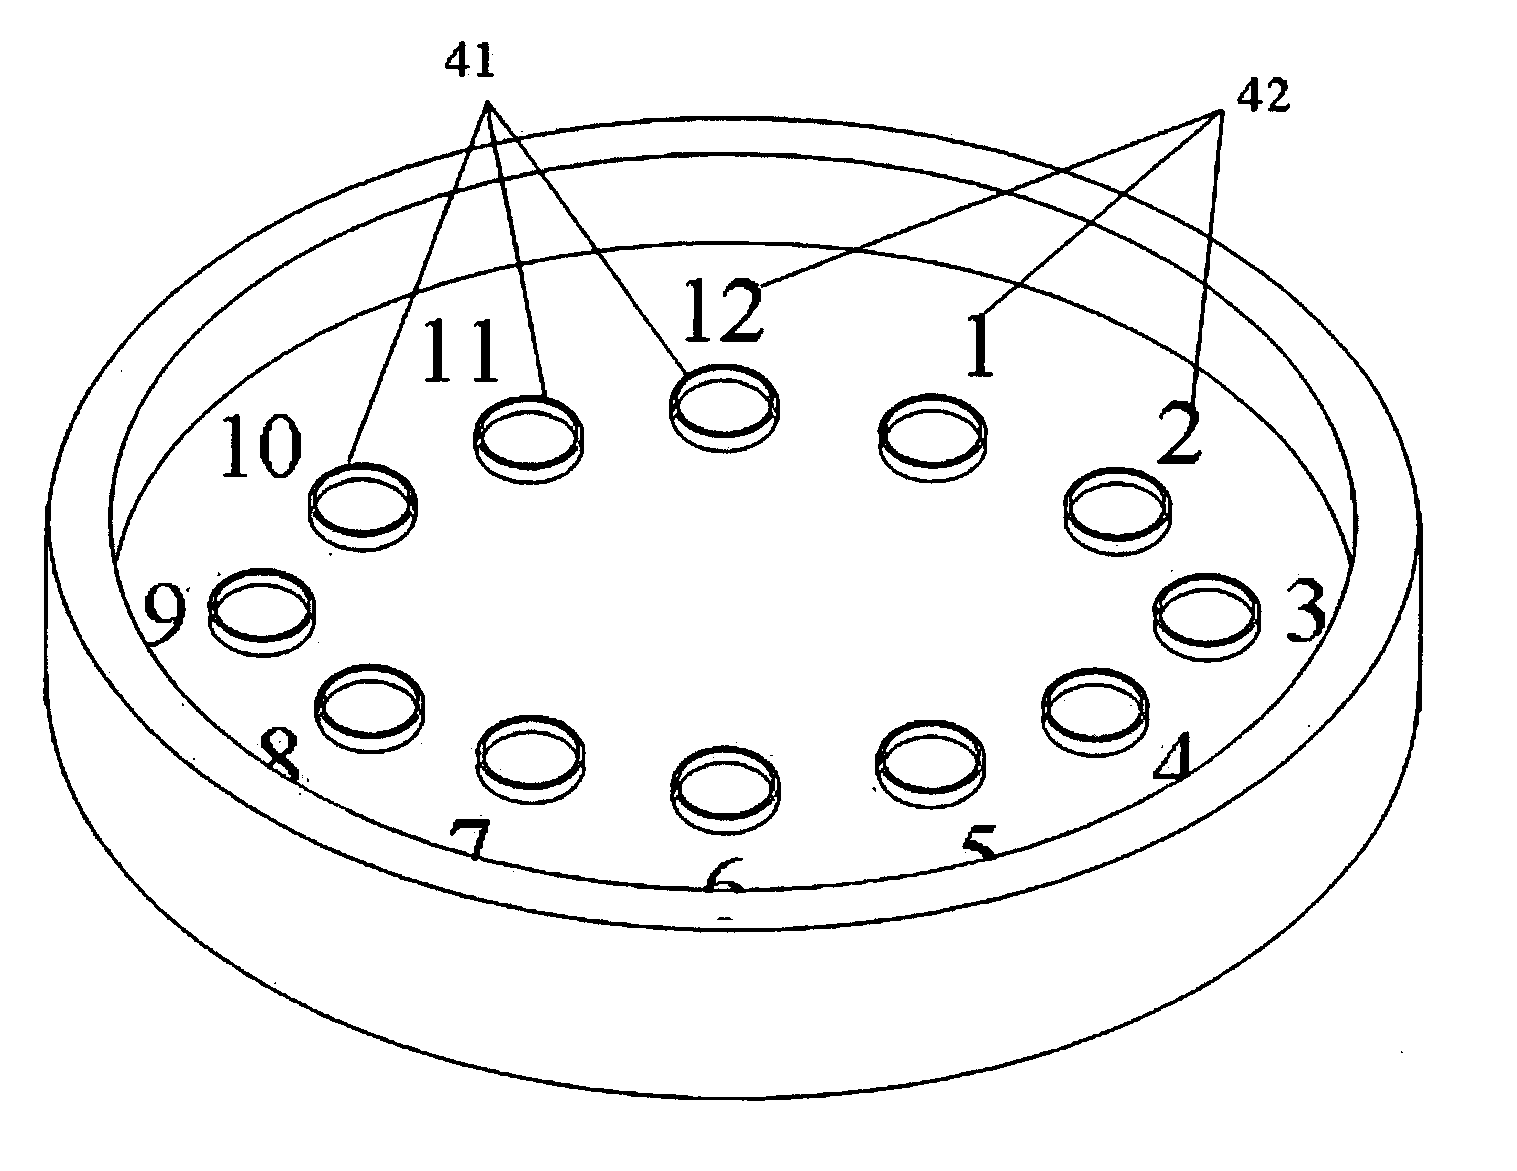 Timer display device having light generating module with circular arrangement